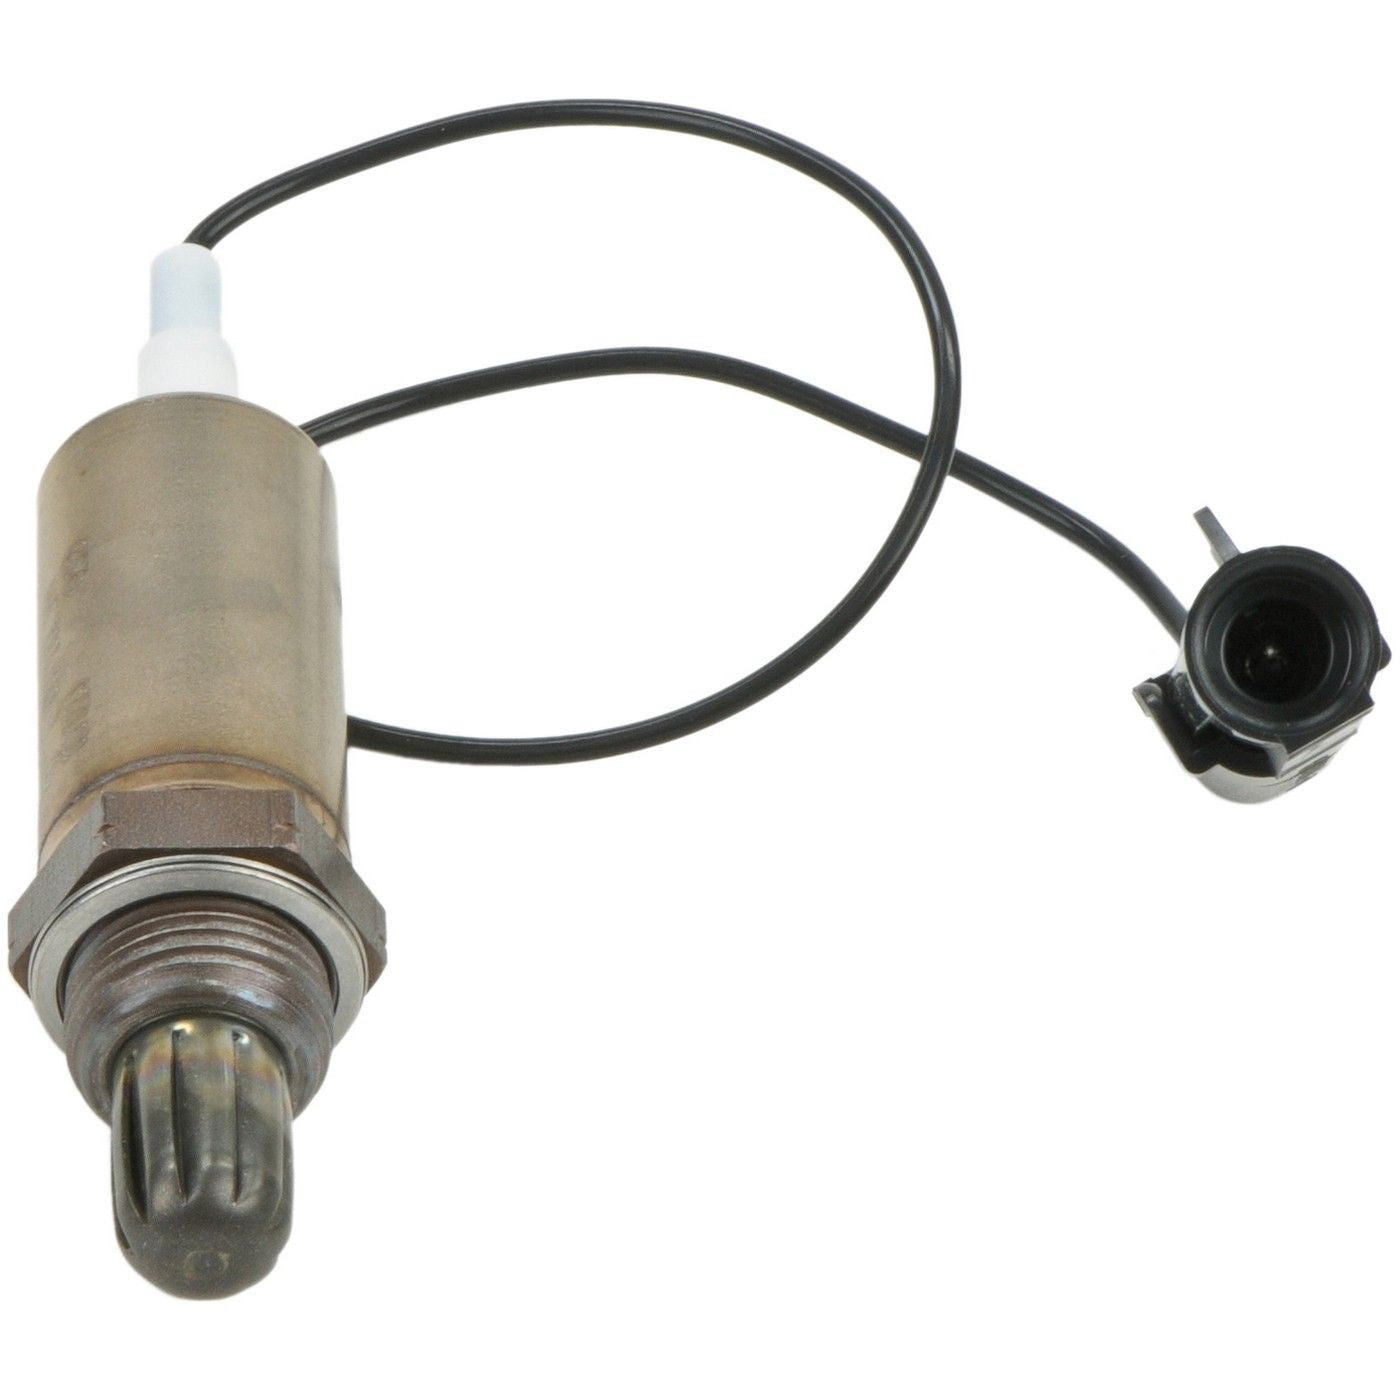 Bosch Oxygen Sensor; OE Replacement; 15.7 Inch Length Wiring Harness; Male Pin Connector; Single Sensor 02 SENSOR AMC/GM/GEO/JEEP